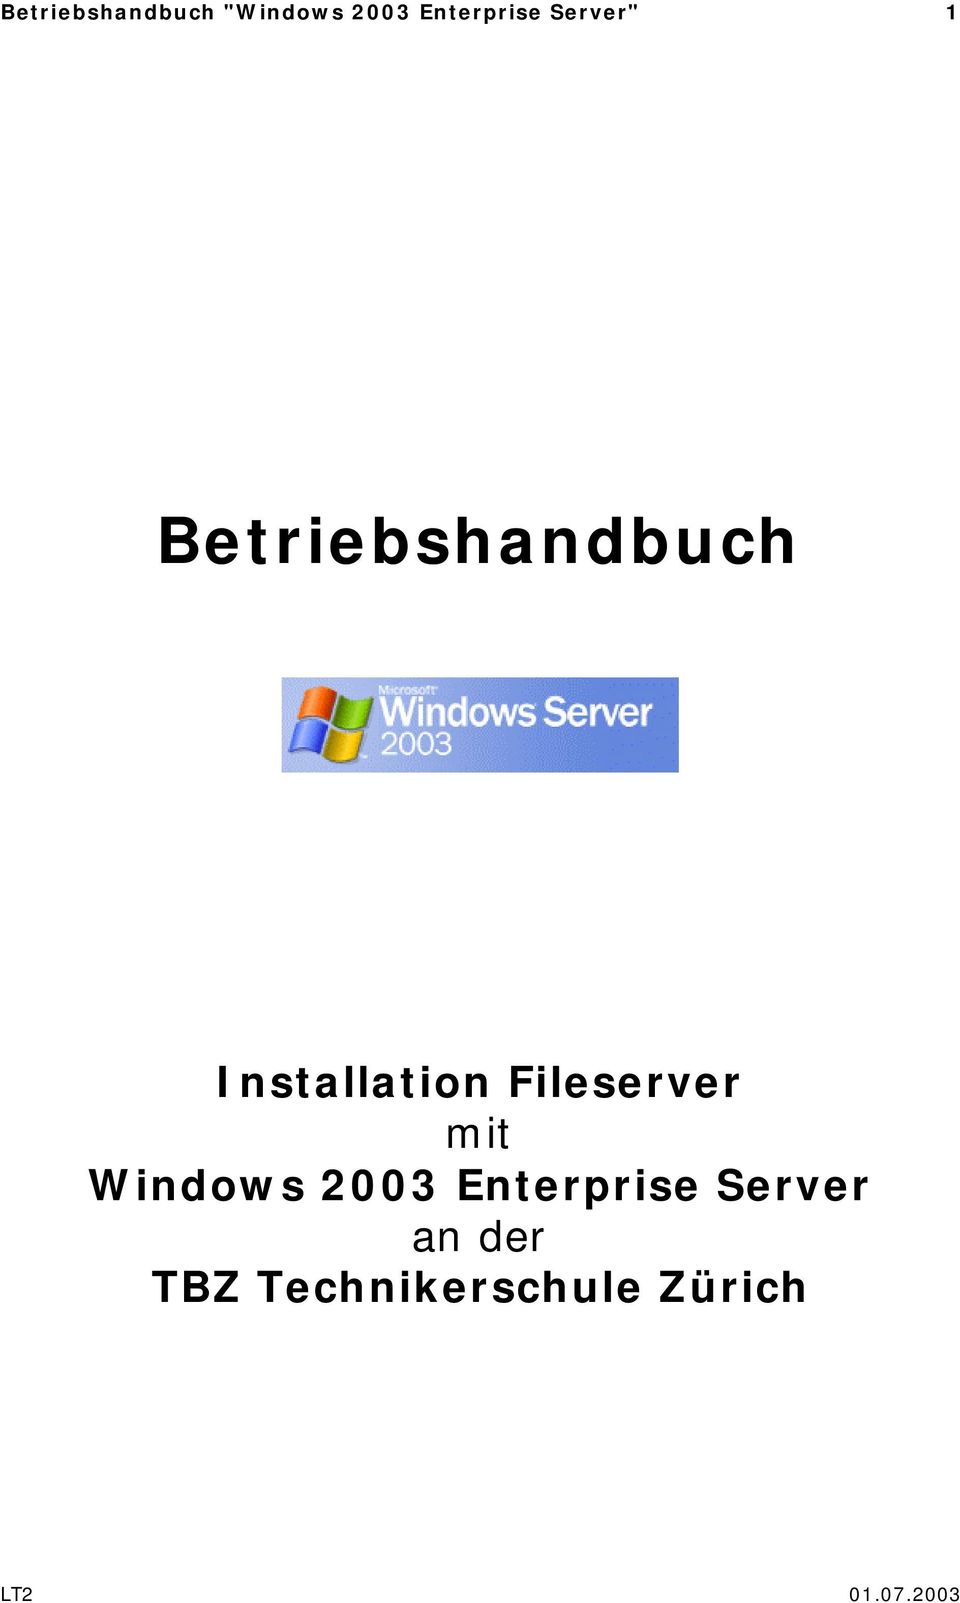 Windows 2003 Enterprise